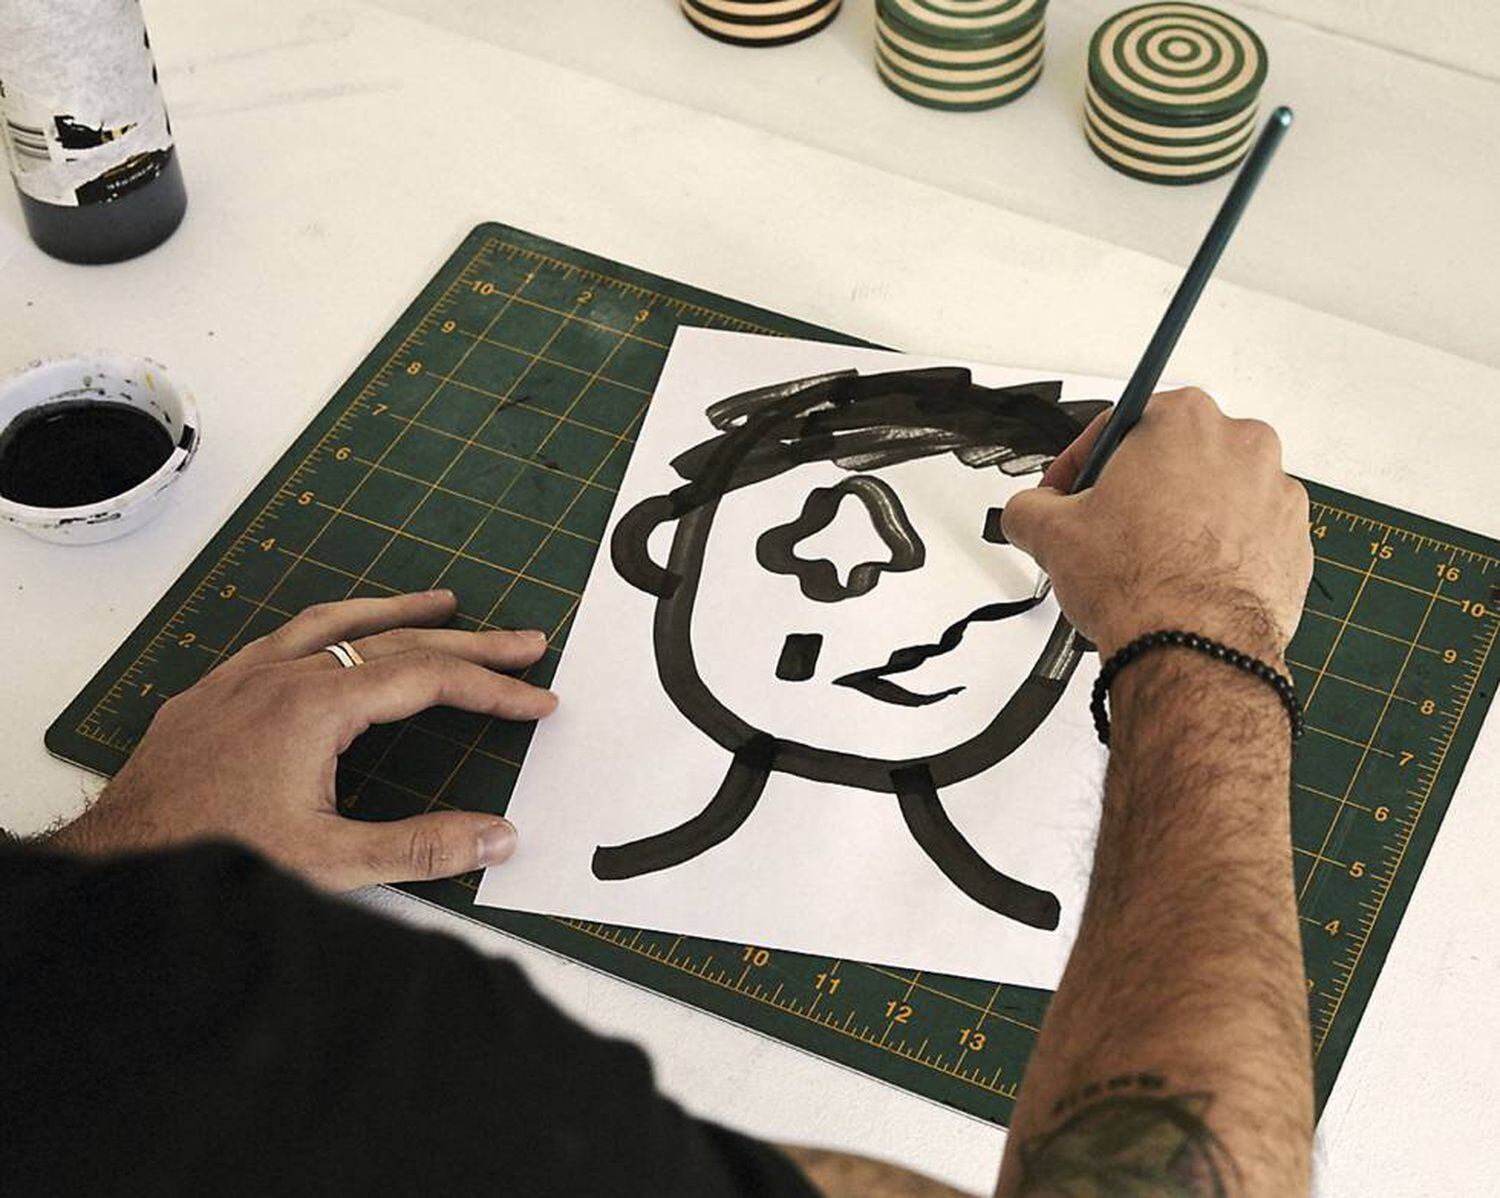 Pablo Delcán drawing